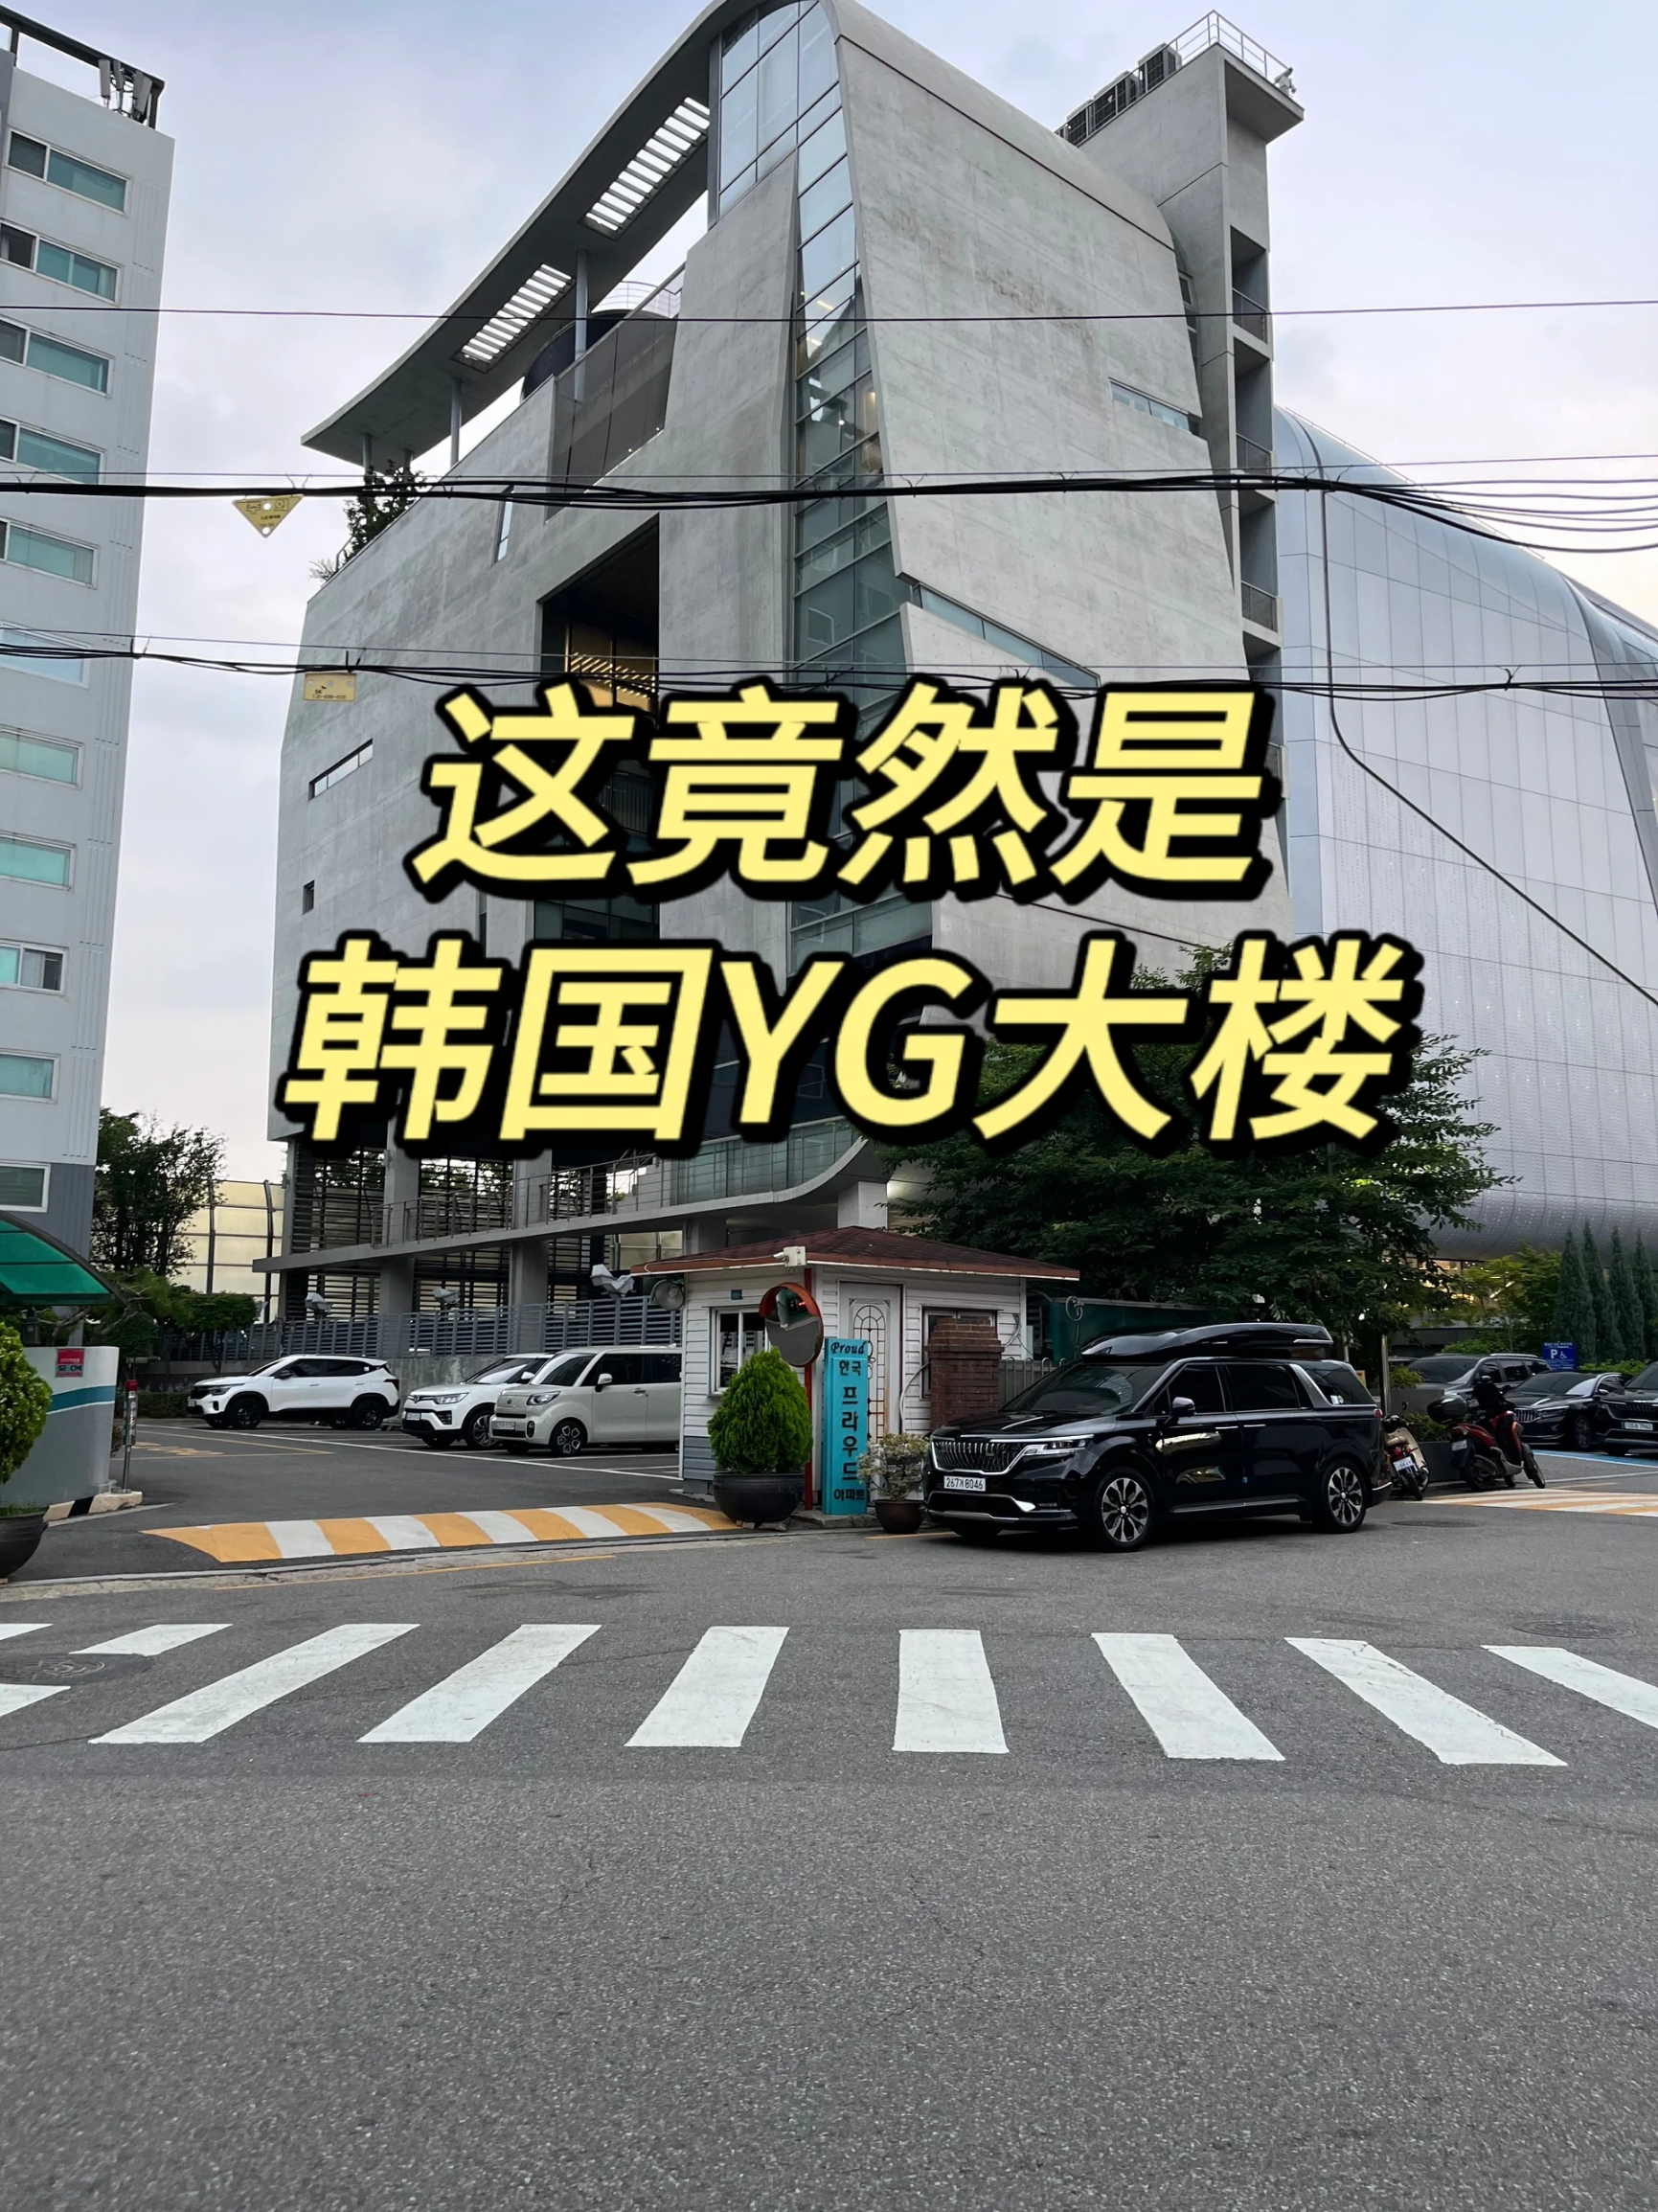 YG娱乐公司的满分攻略来了~看一下有没有你喜欢的明星😍😍